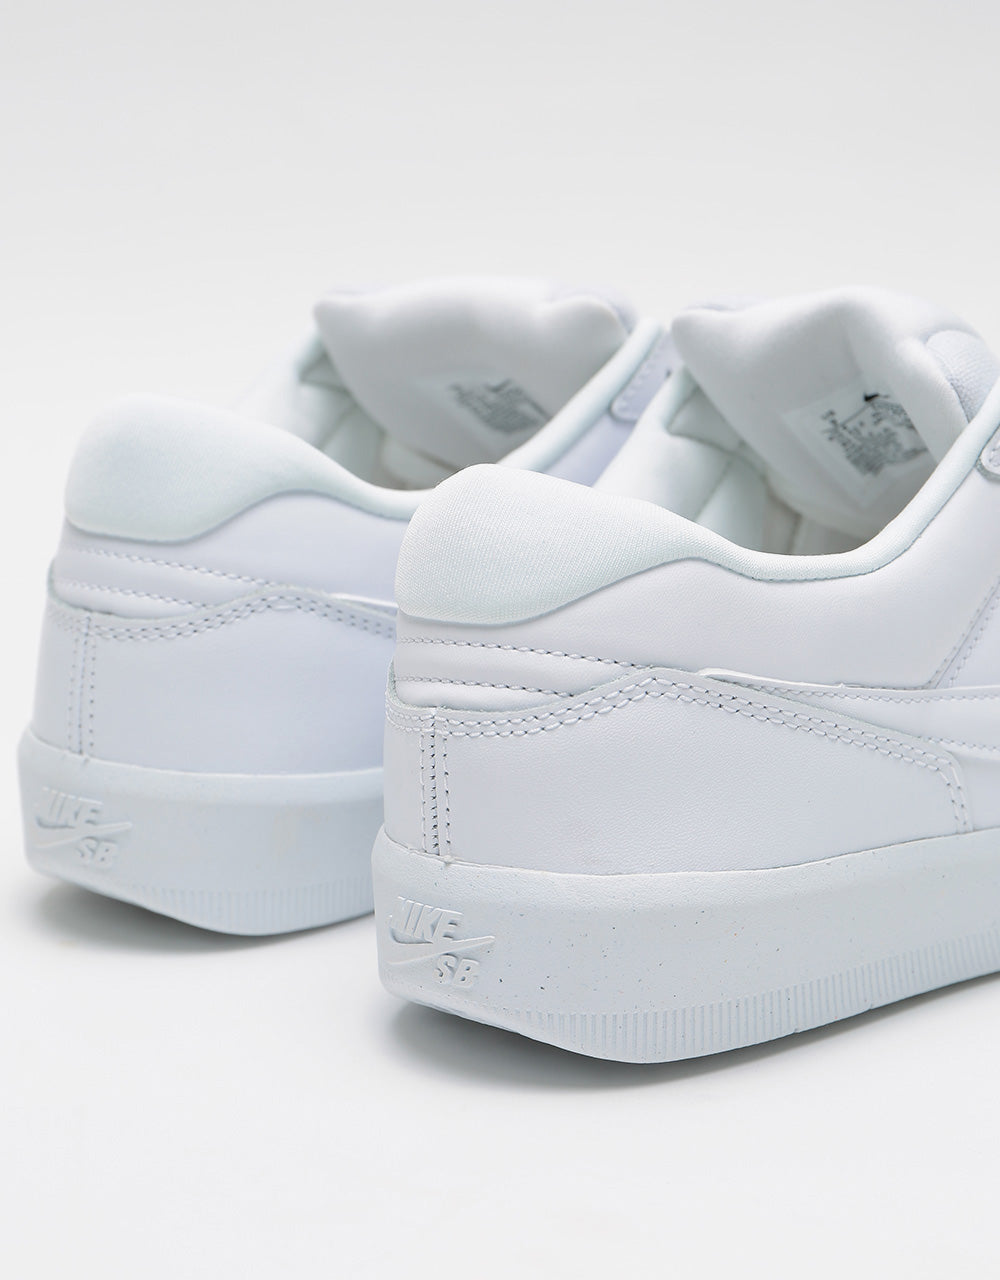 Nike SB Force 58 Premium Leather Skate Shoes - White/White-White-White